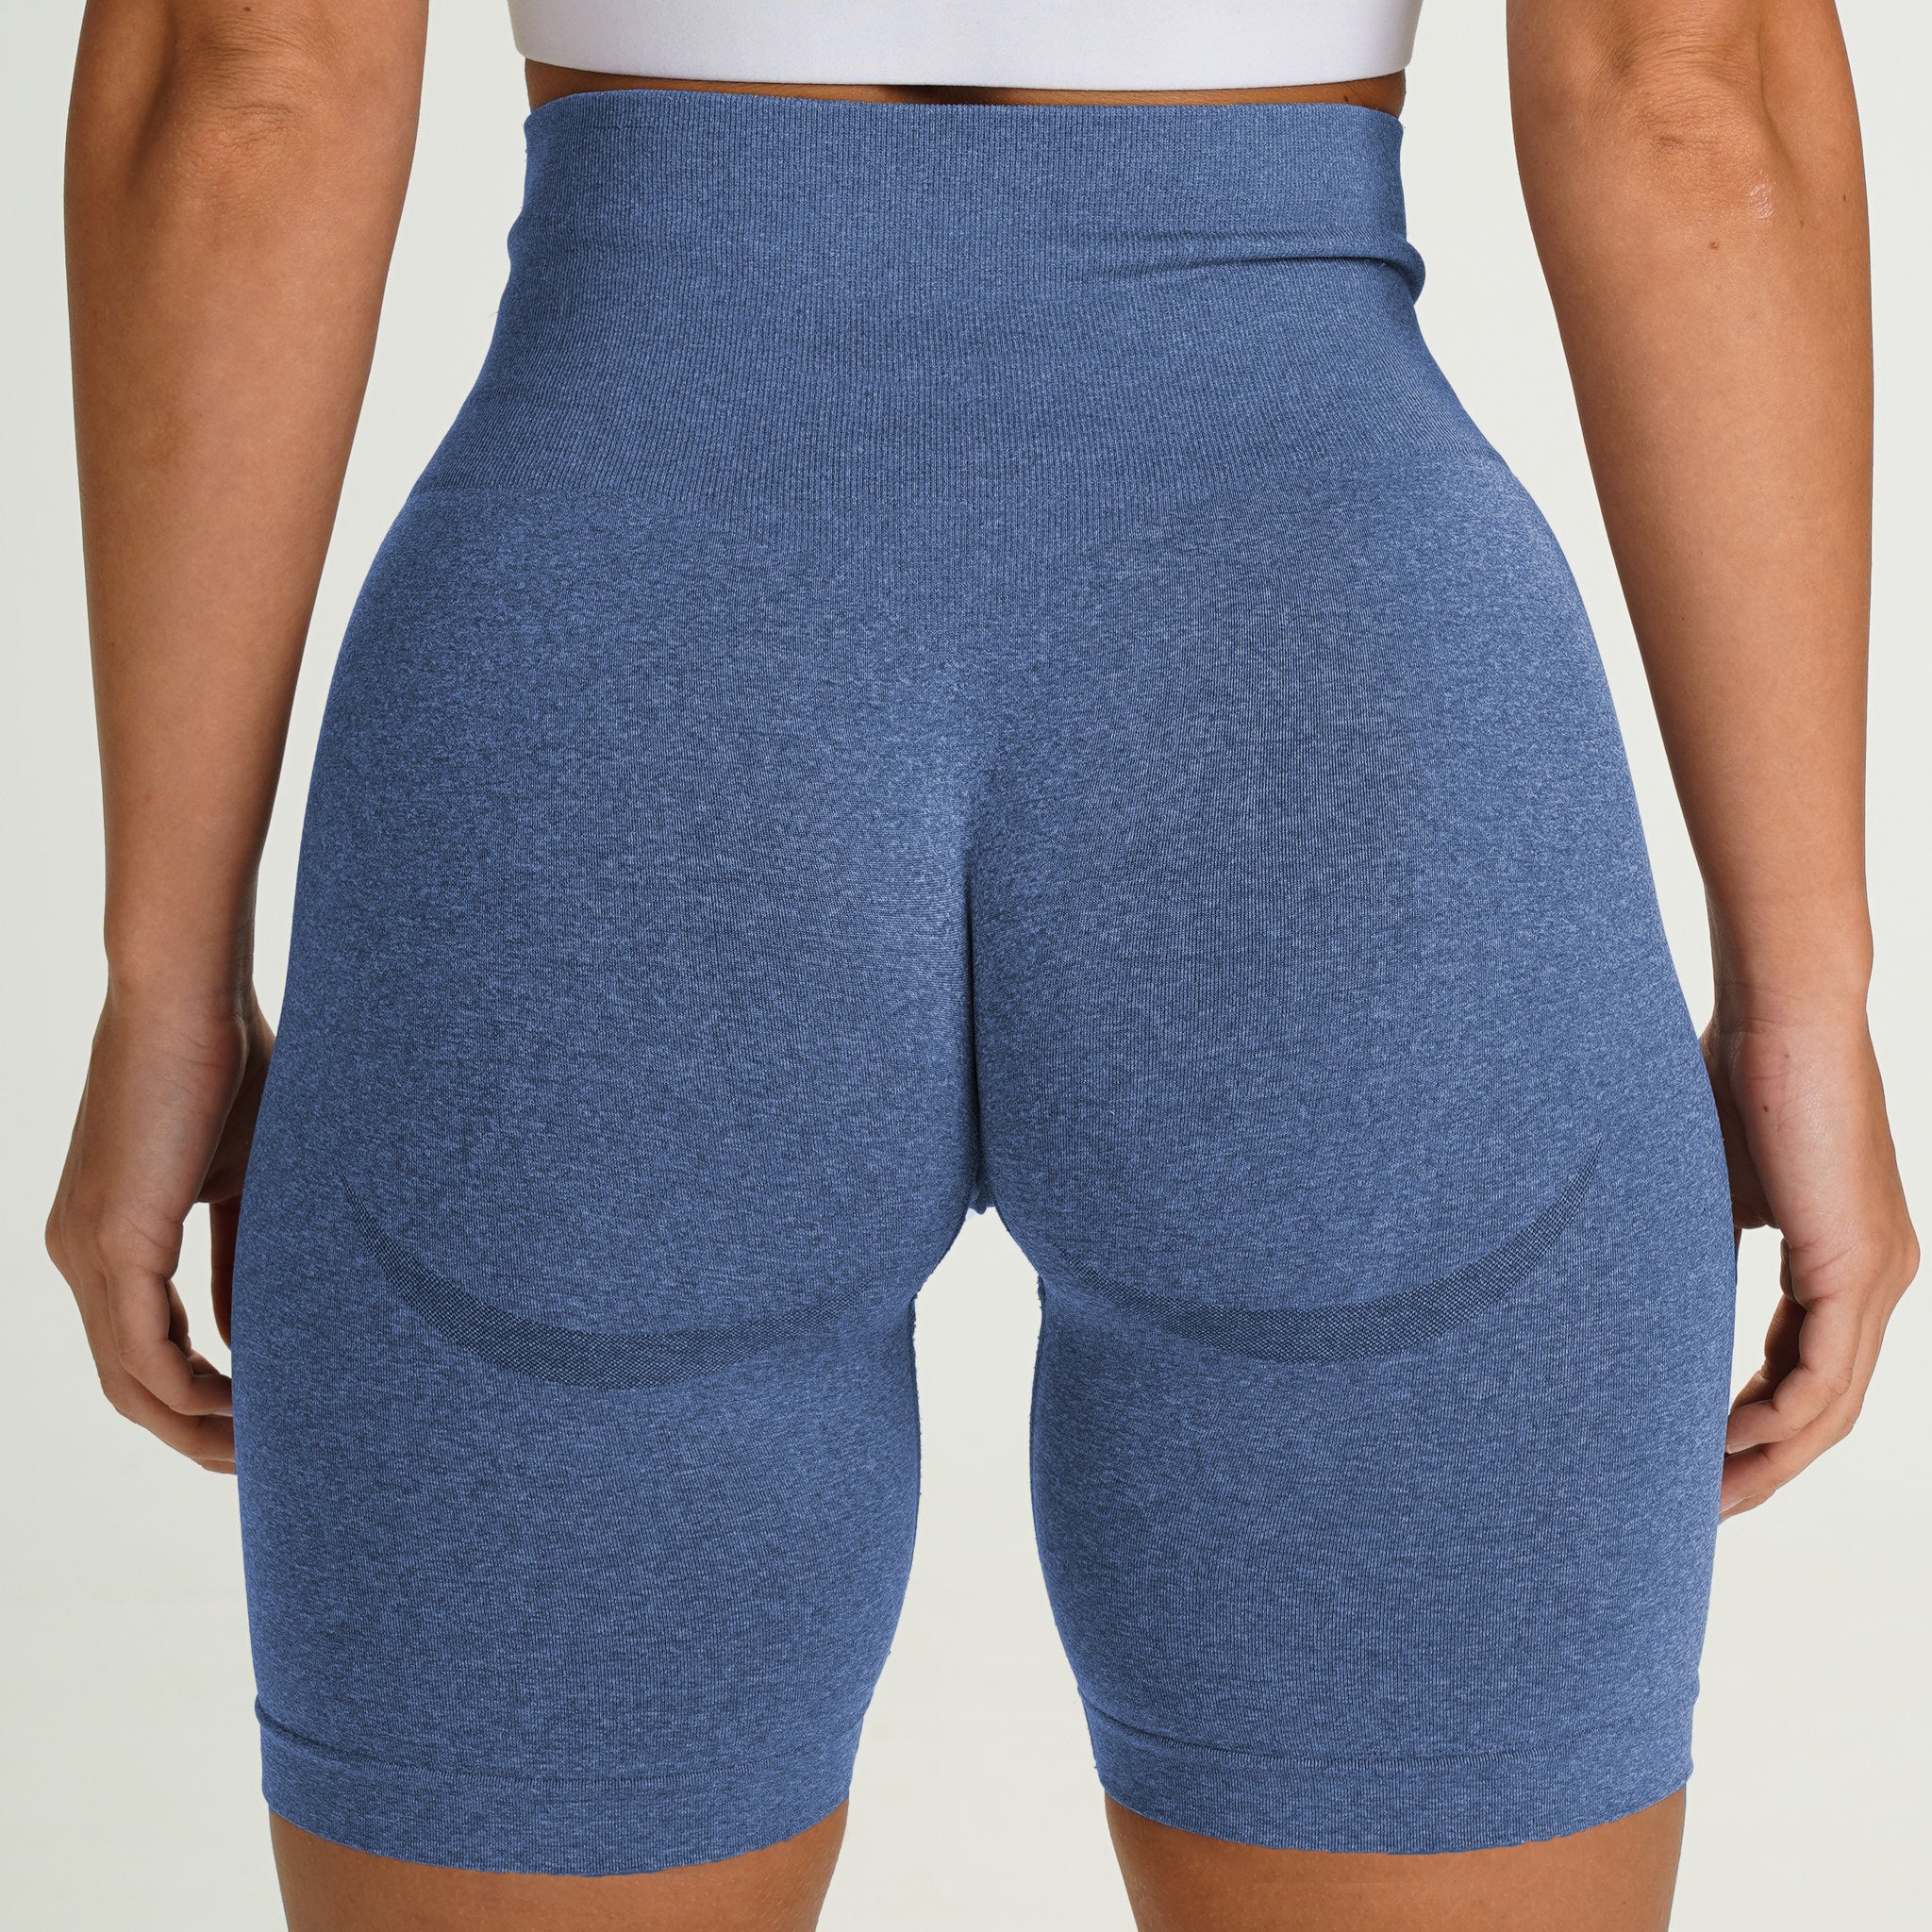 Egyptian Blue Contour Shorts - Lirio Fitness